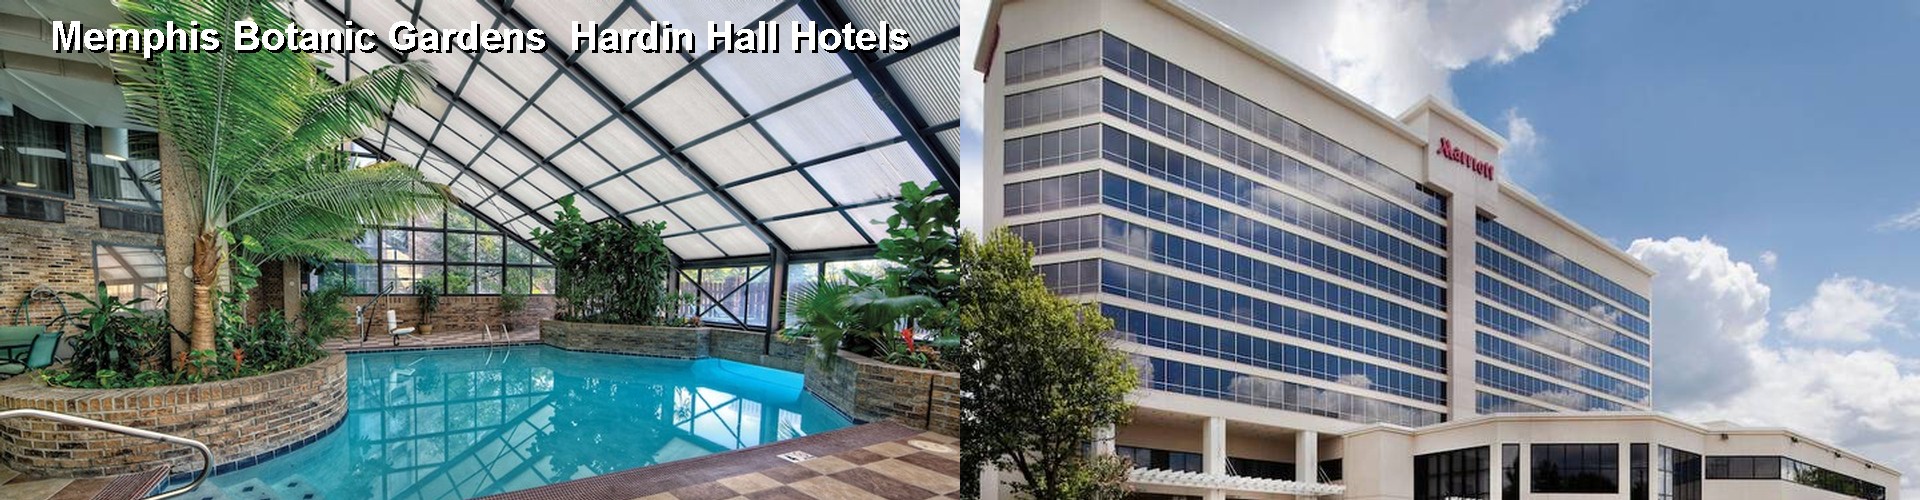 3 Best Hotels near Memphis Botanic Gardens  Hardin Hall